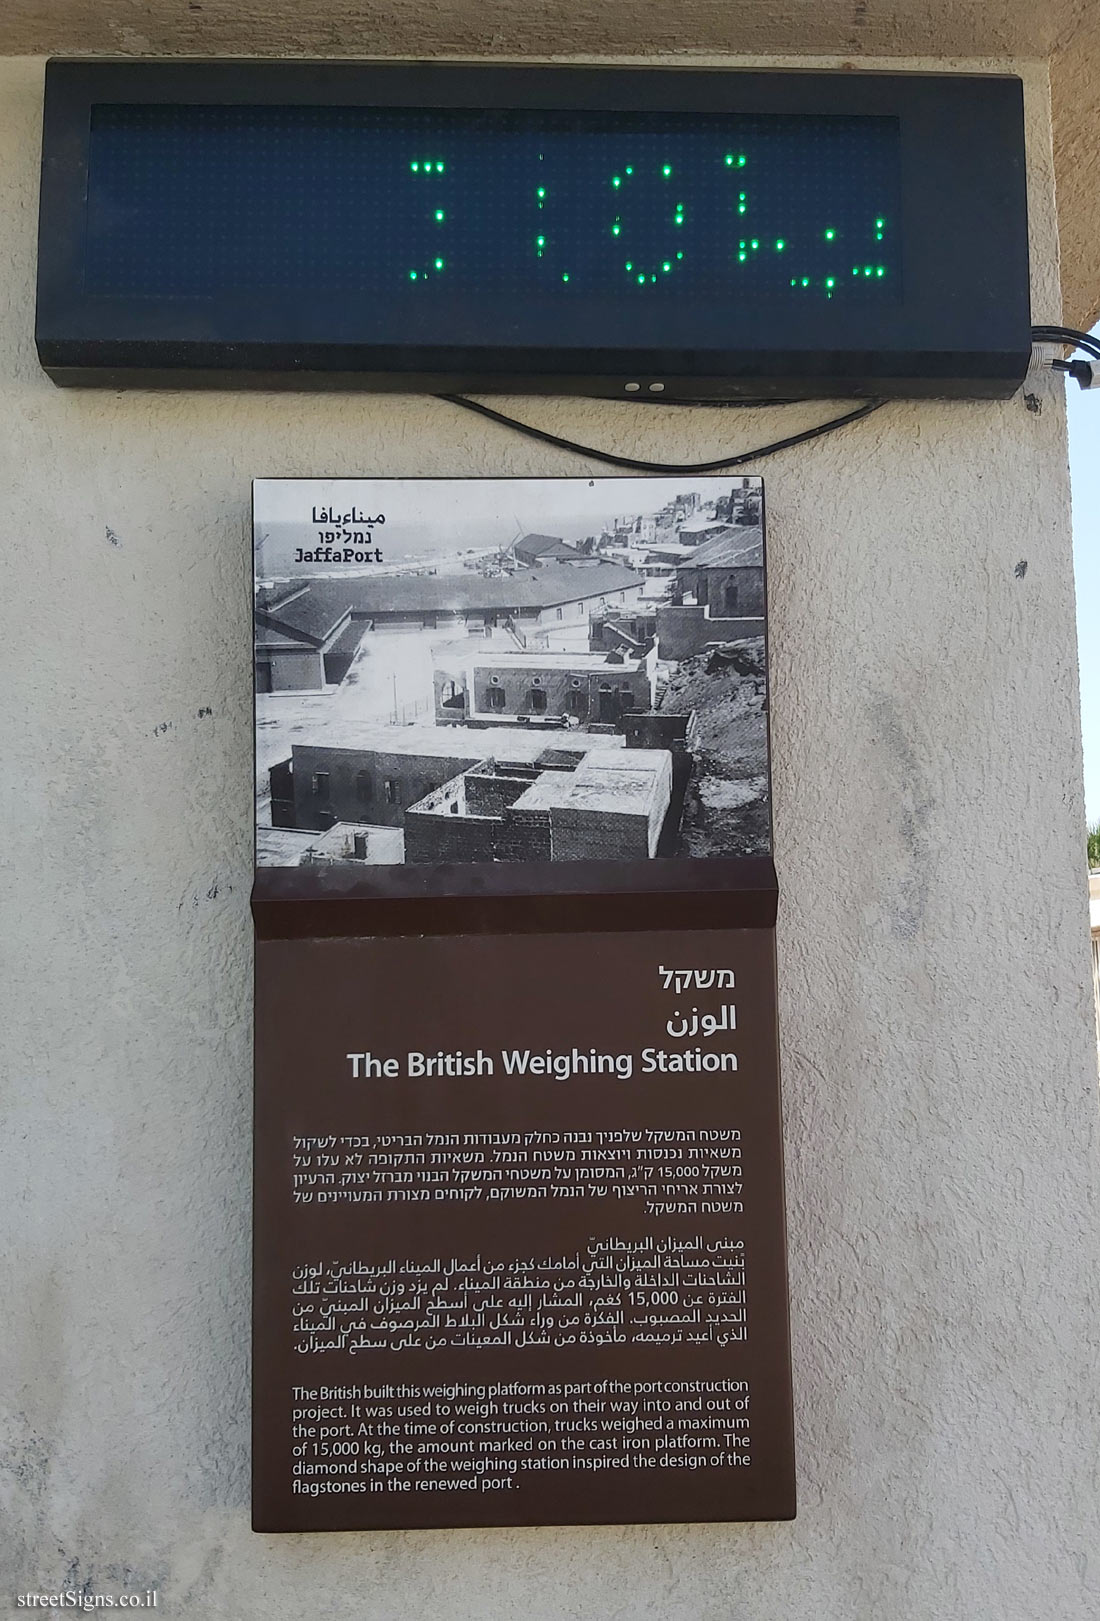 Tel Aviv - Jaffa Port - The British Weighing Station